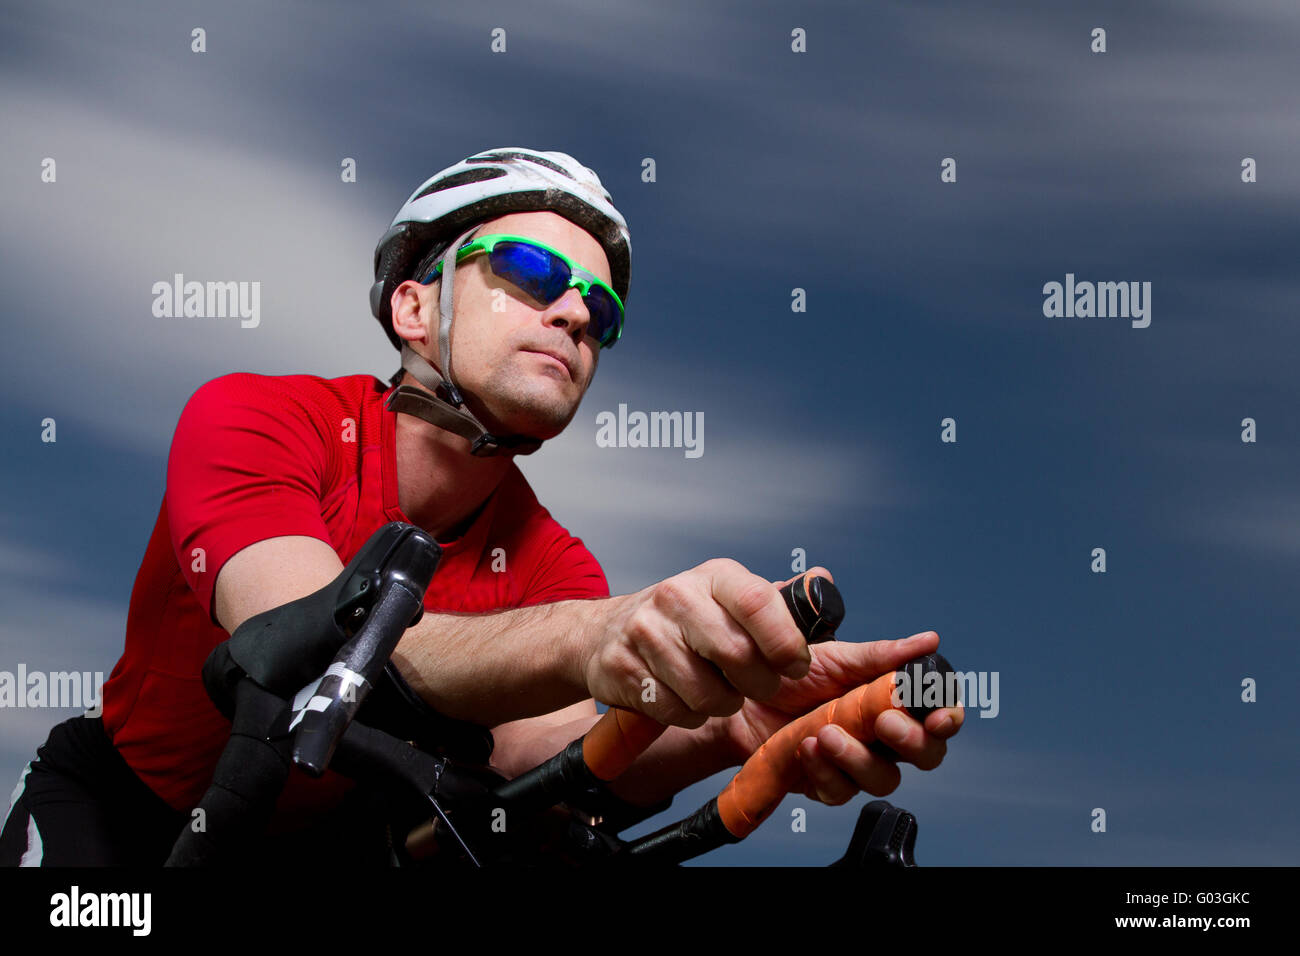 Triathlete on the bicycle Stock Photo